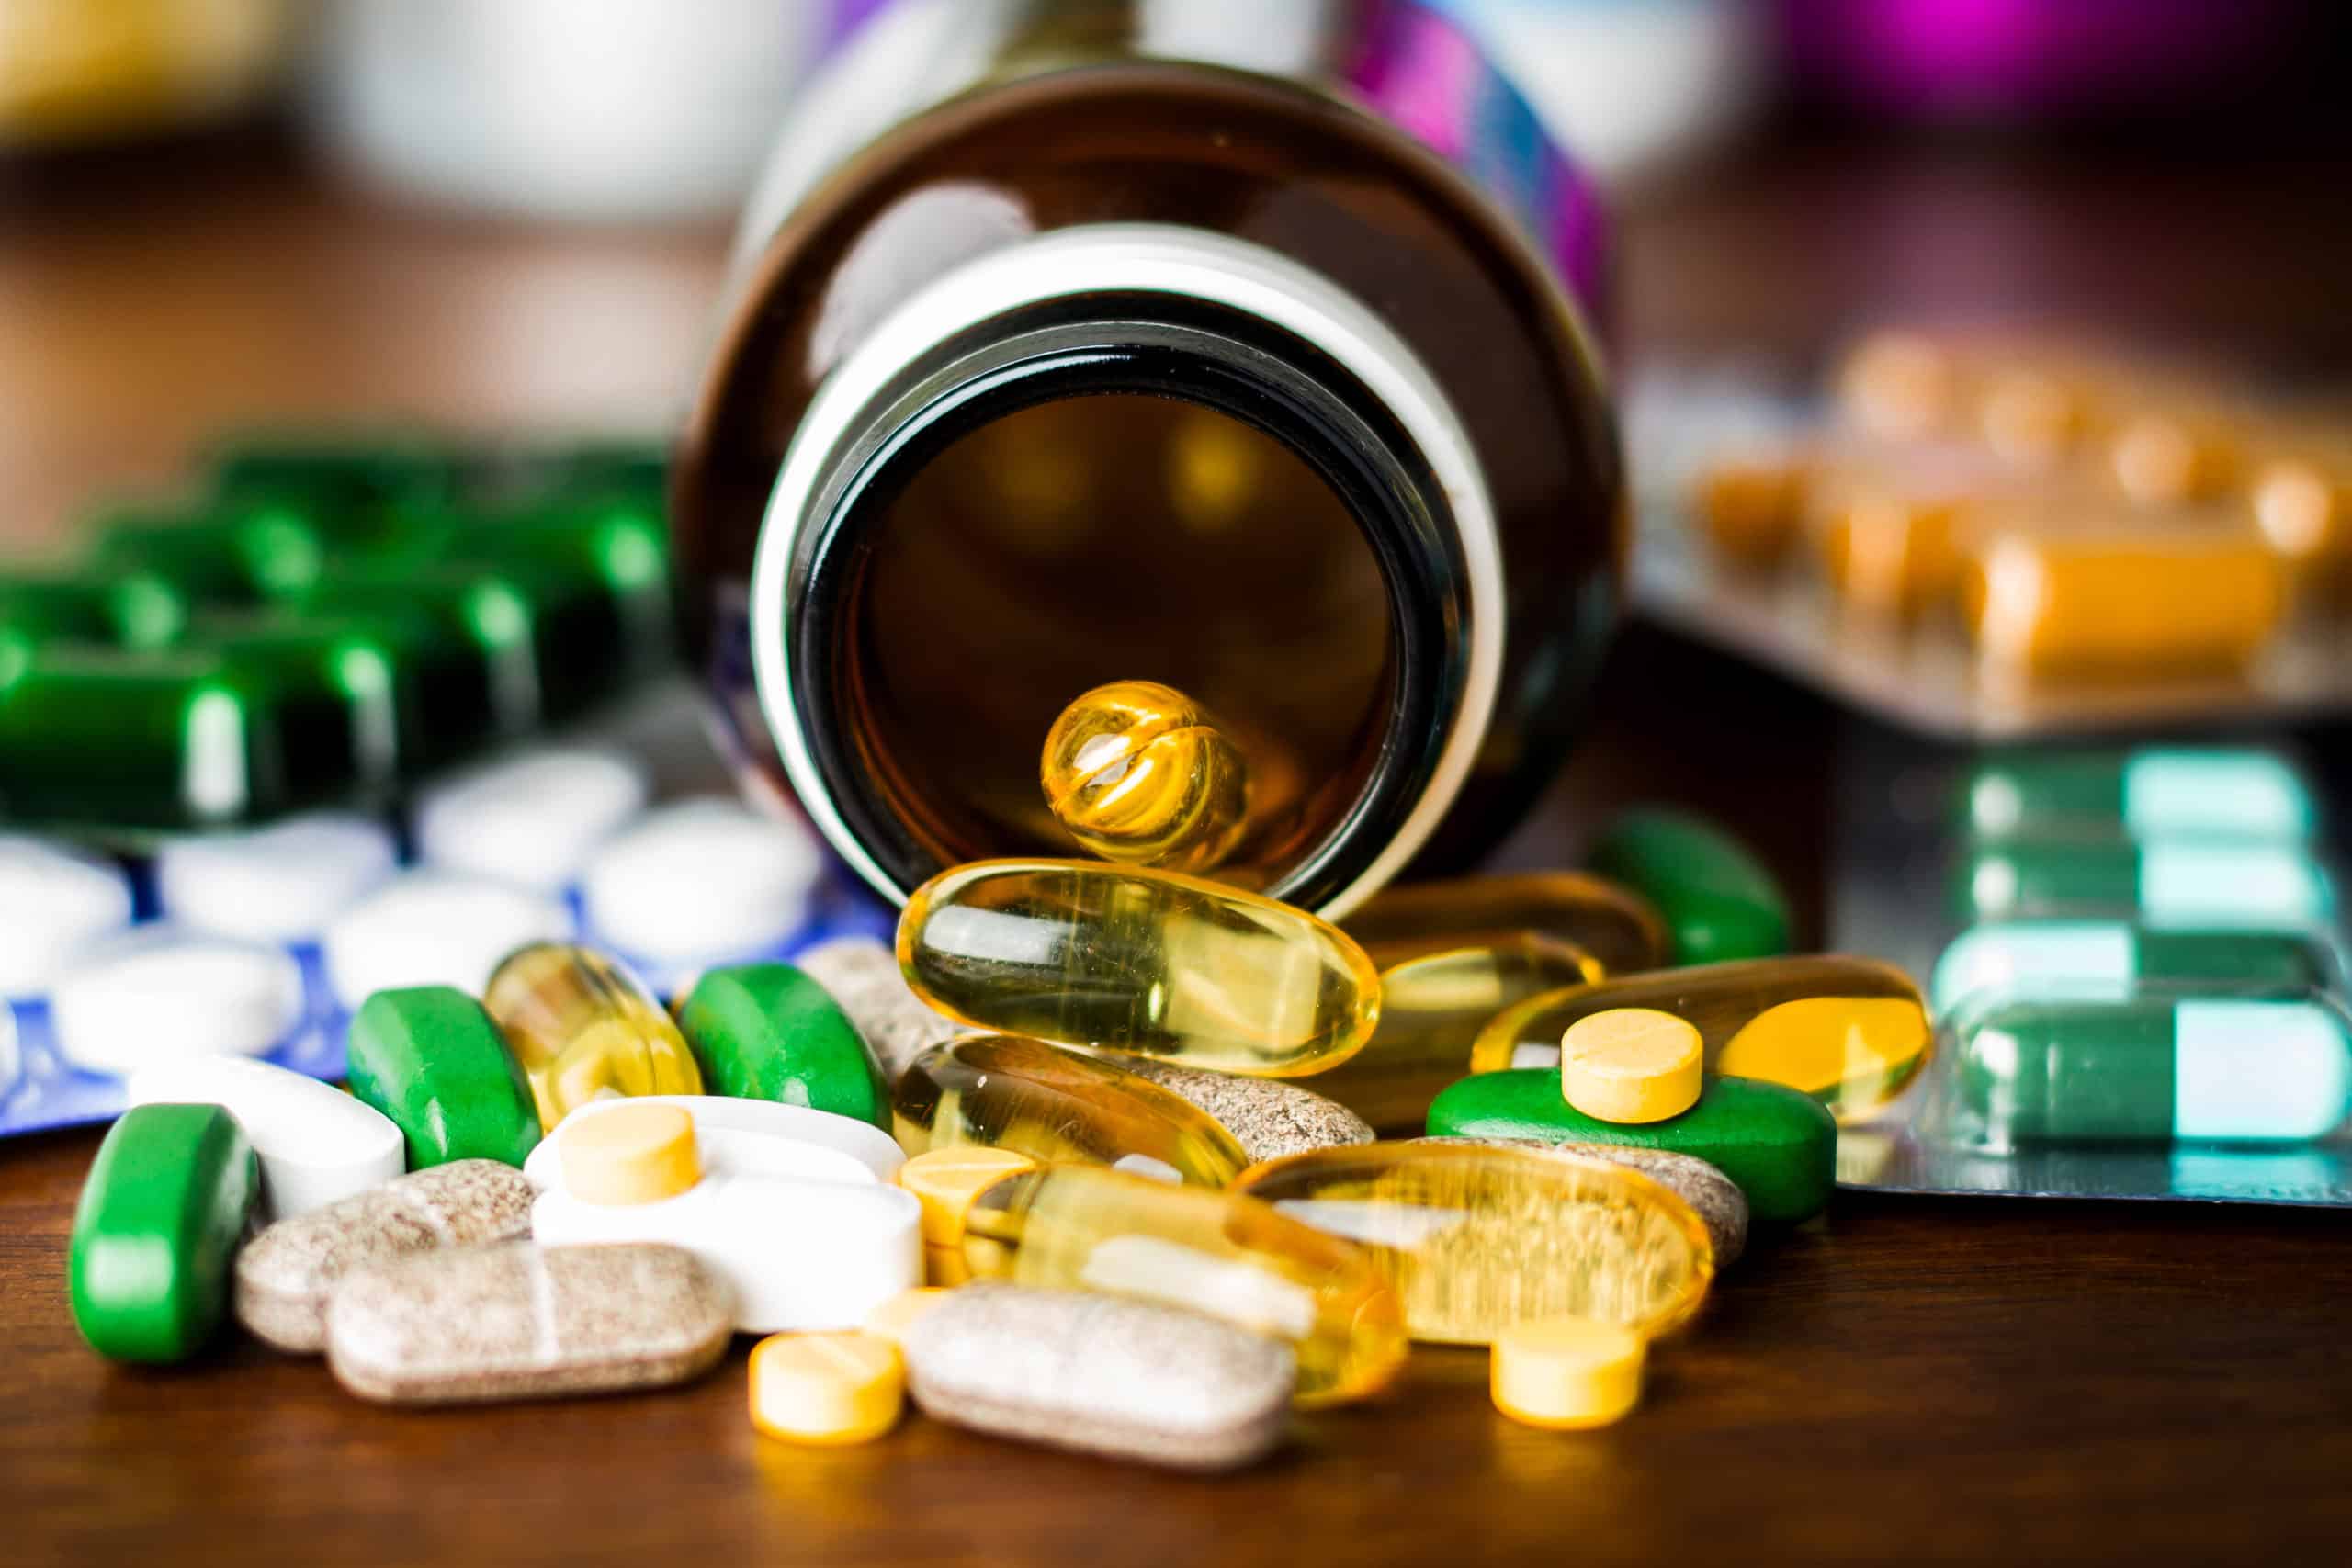 Common Signs of Prescription Drug Abuse